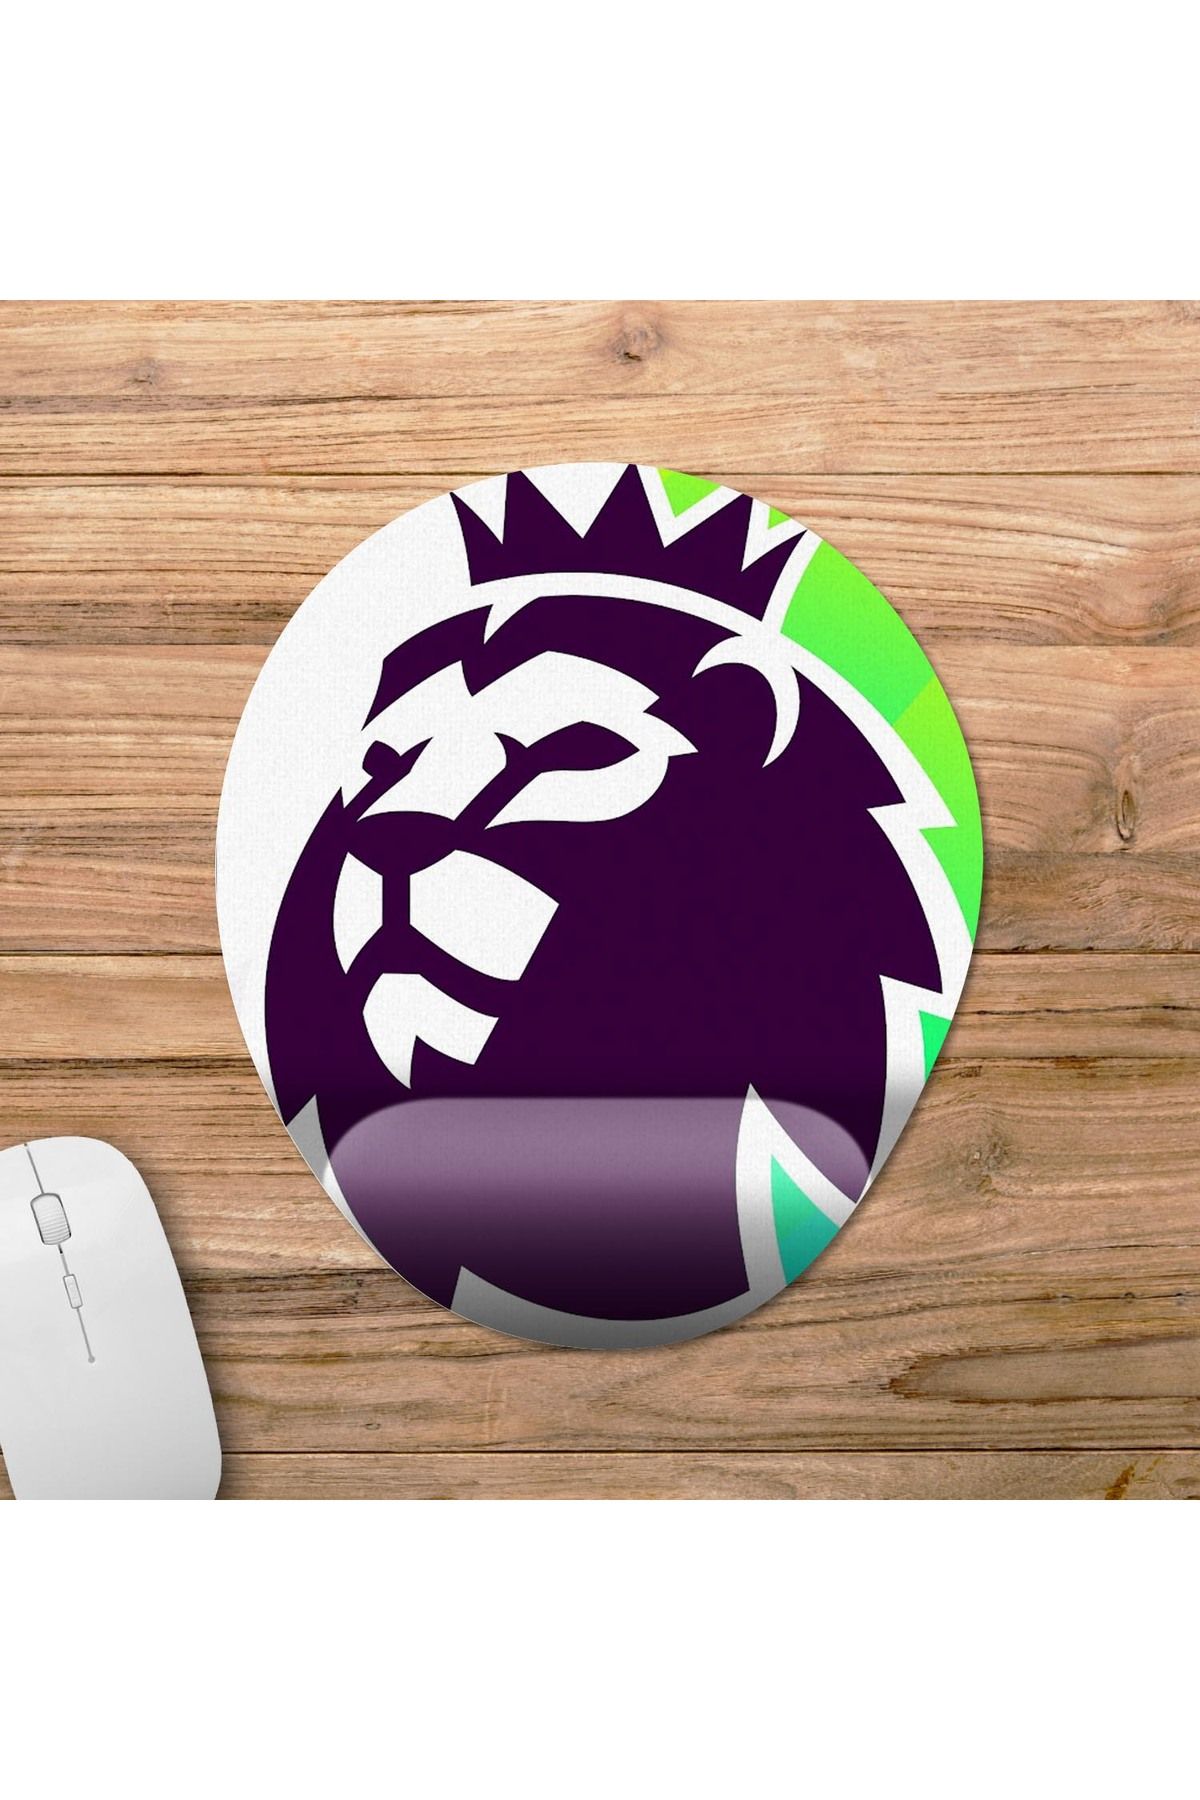 Pixxa Premier League - İngiltere Futbol Ligi Bilek Destekli Mousepad Model - 1 Oval